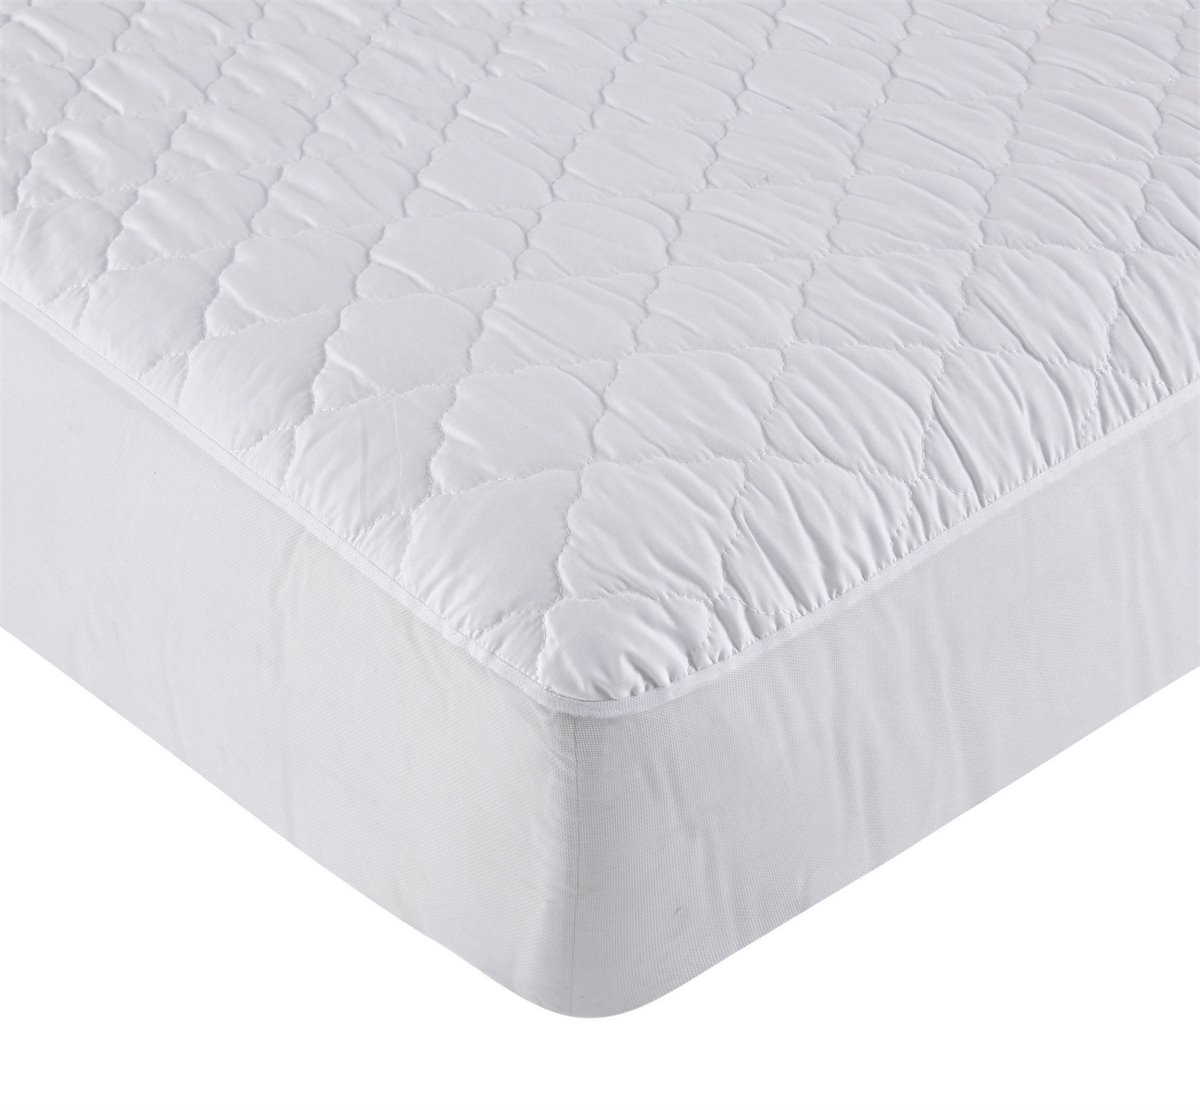 Por qué utilizar un protector colchón impermeable ? •